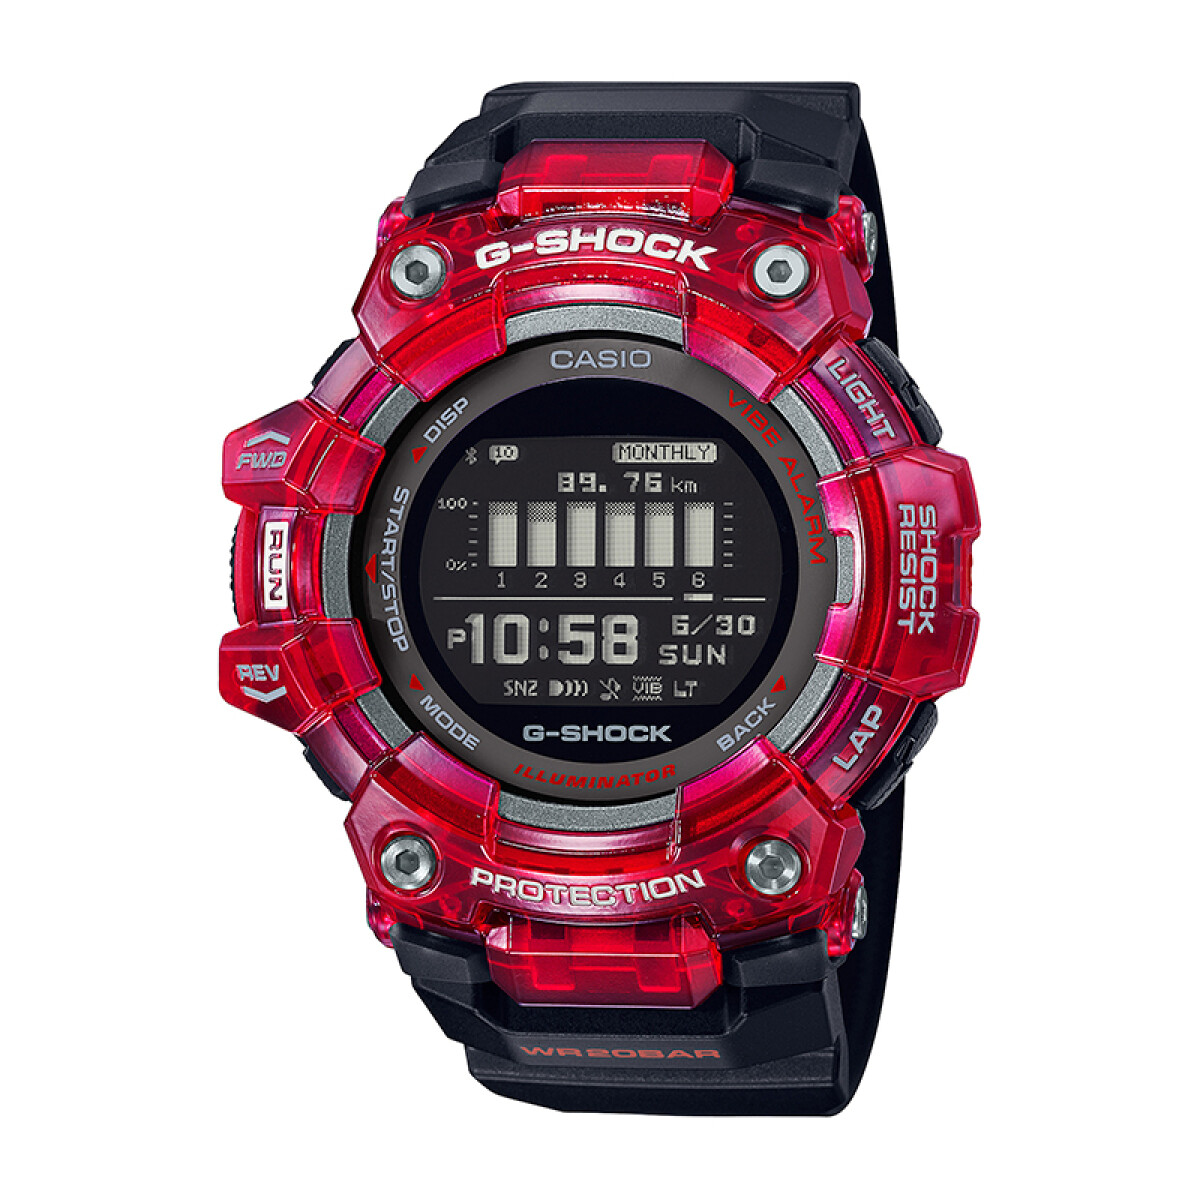 Reloj G-Shock deportivo con banda de resina - negro y rojo 